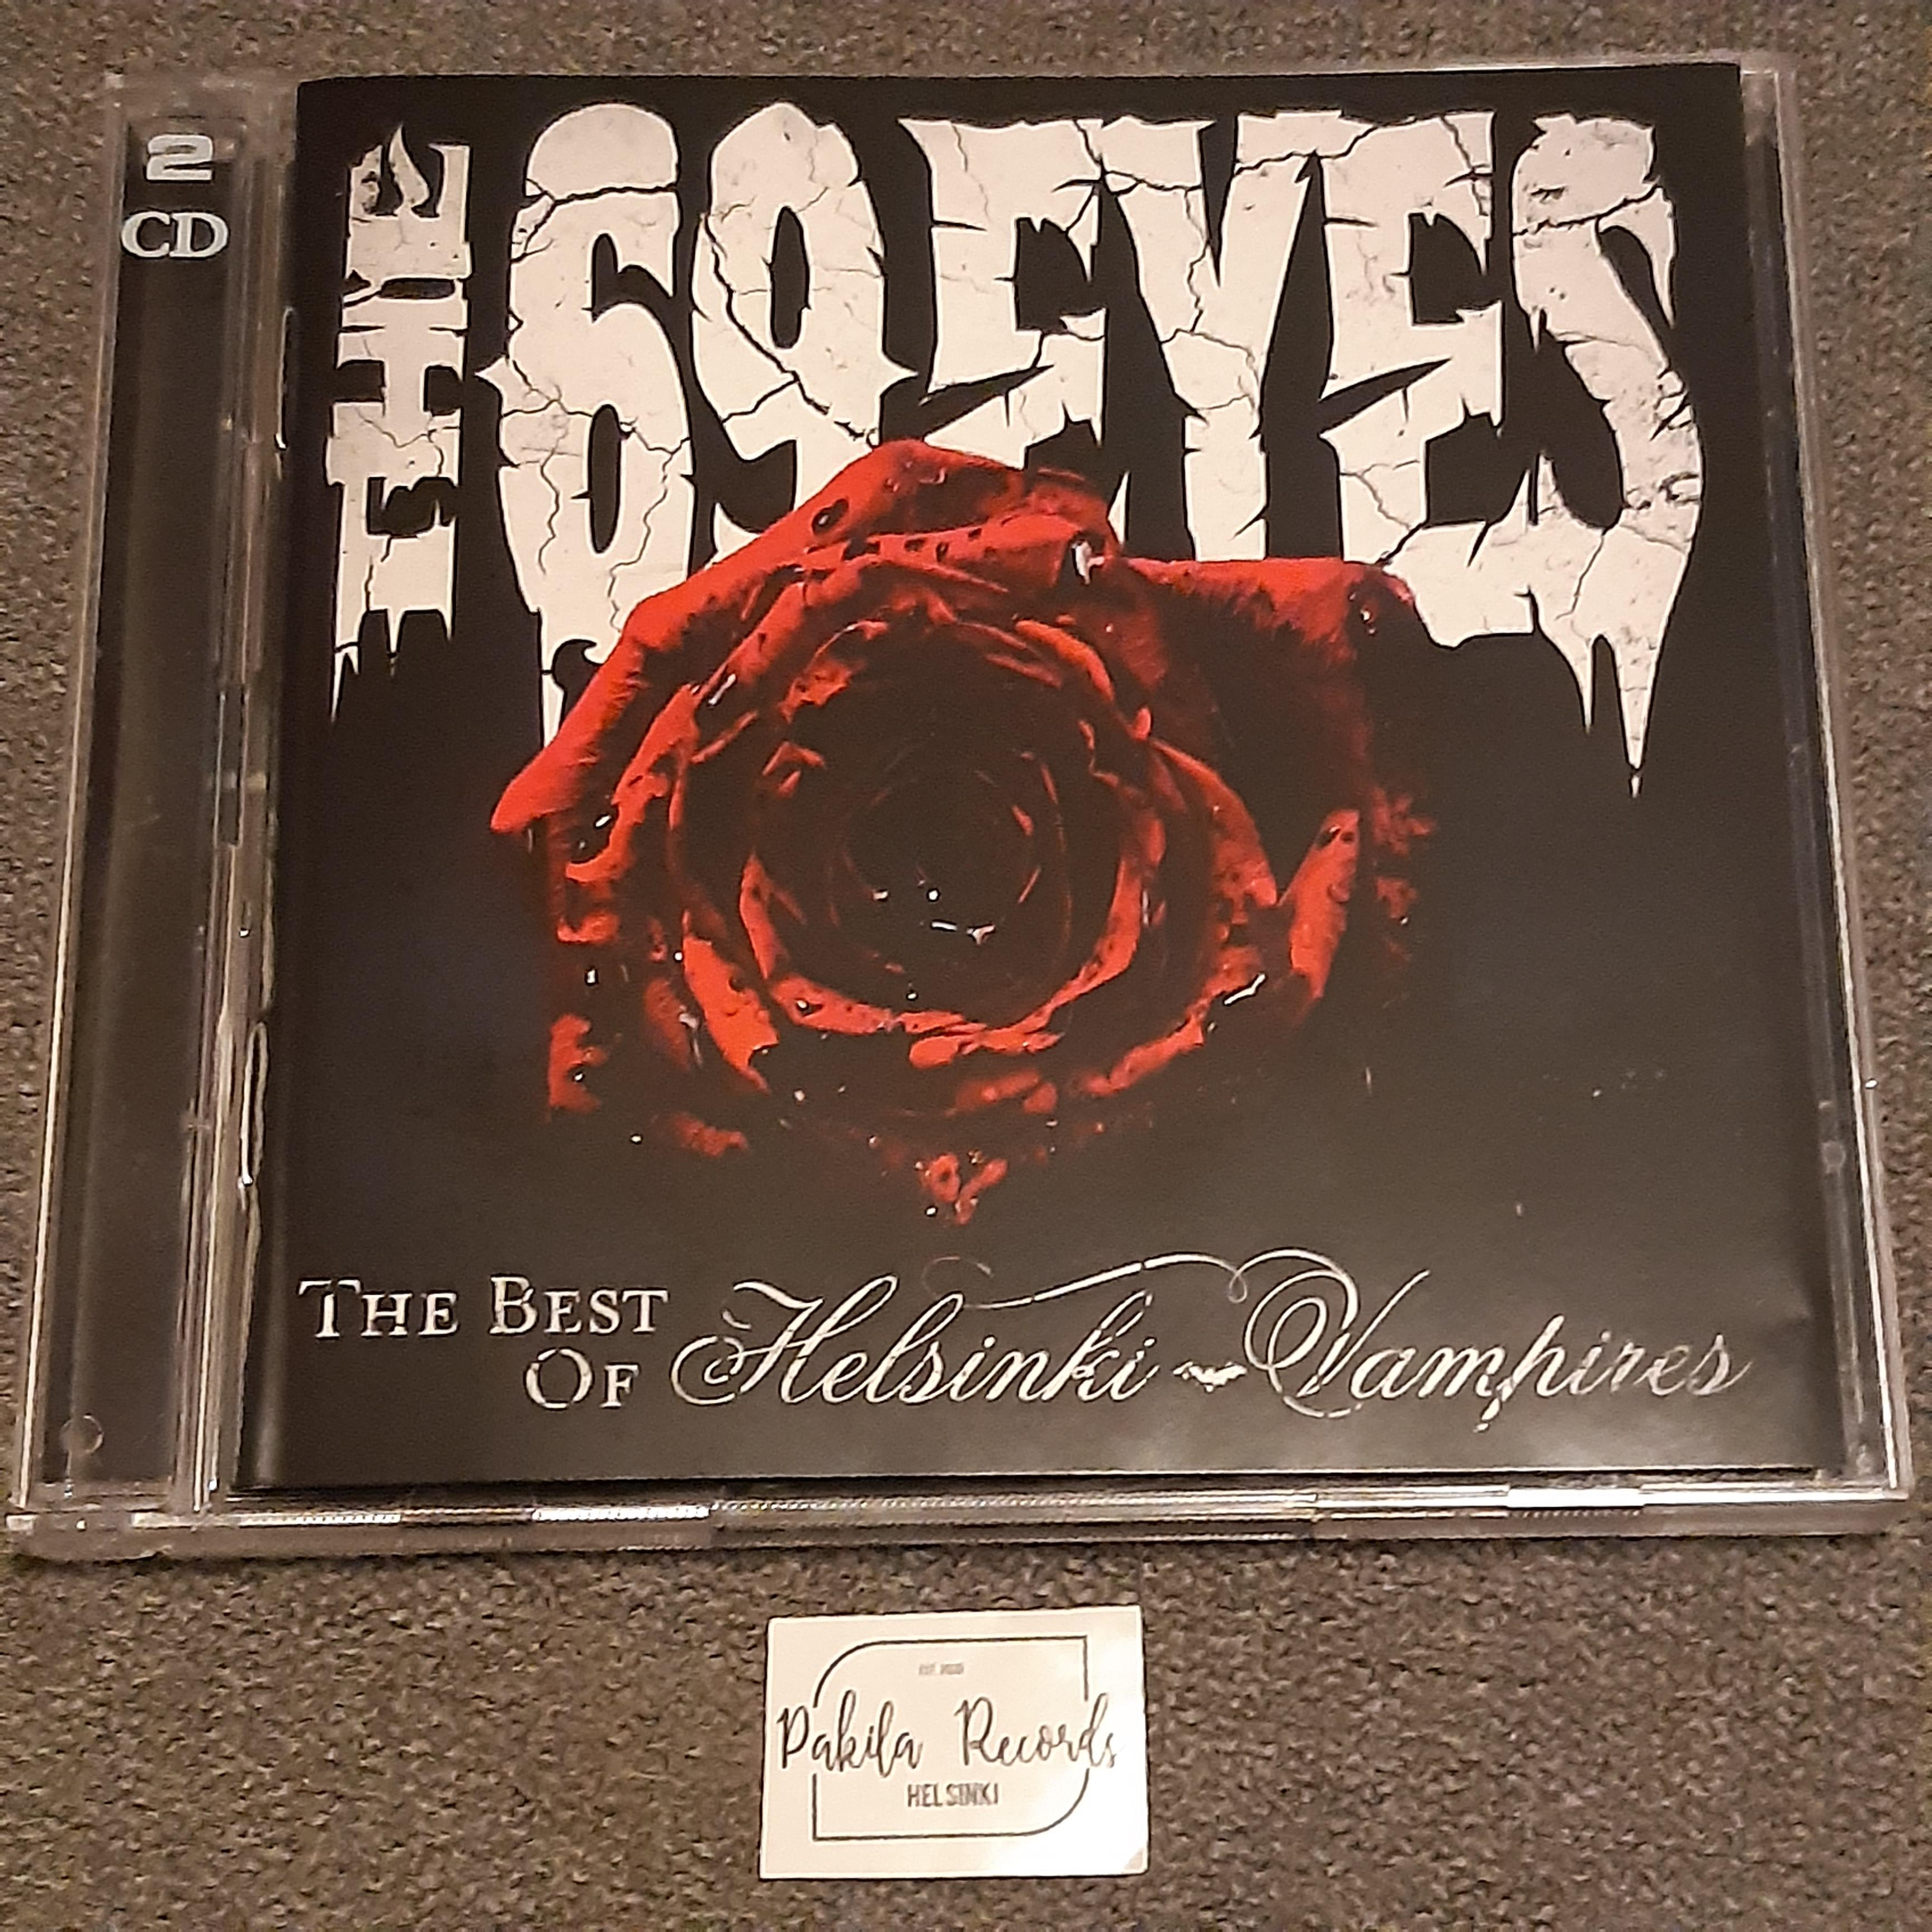 The 69 Eyes - The Best Of Helsinki Vampires - 2 CD (käytetty)